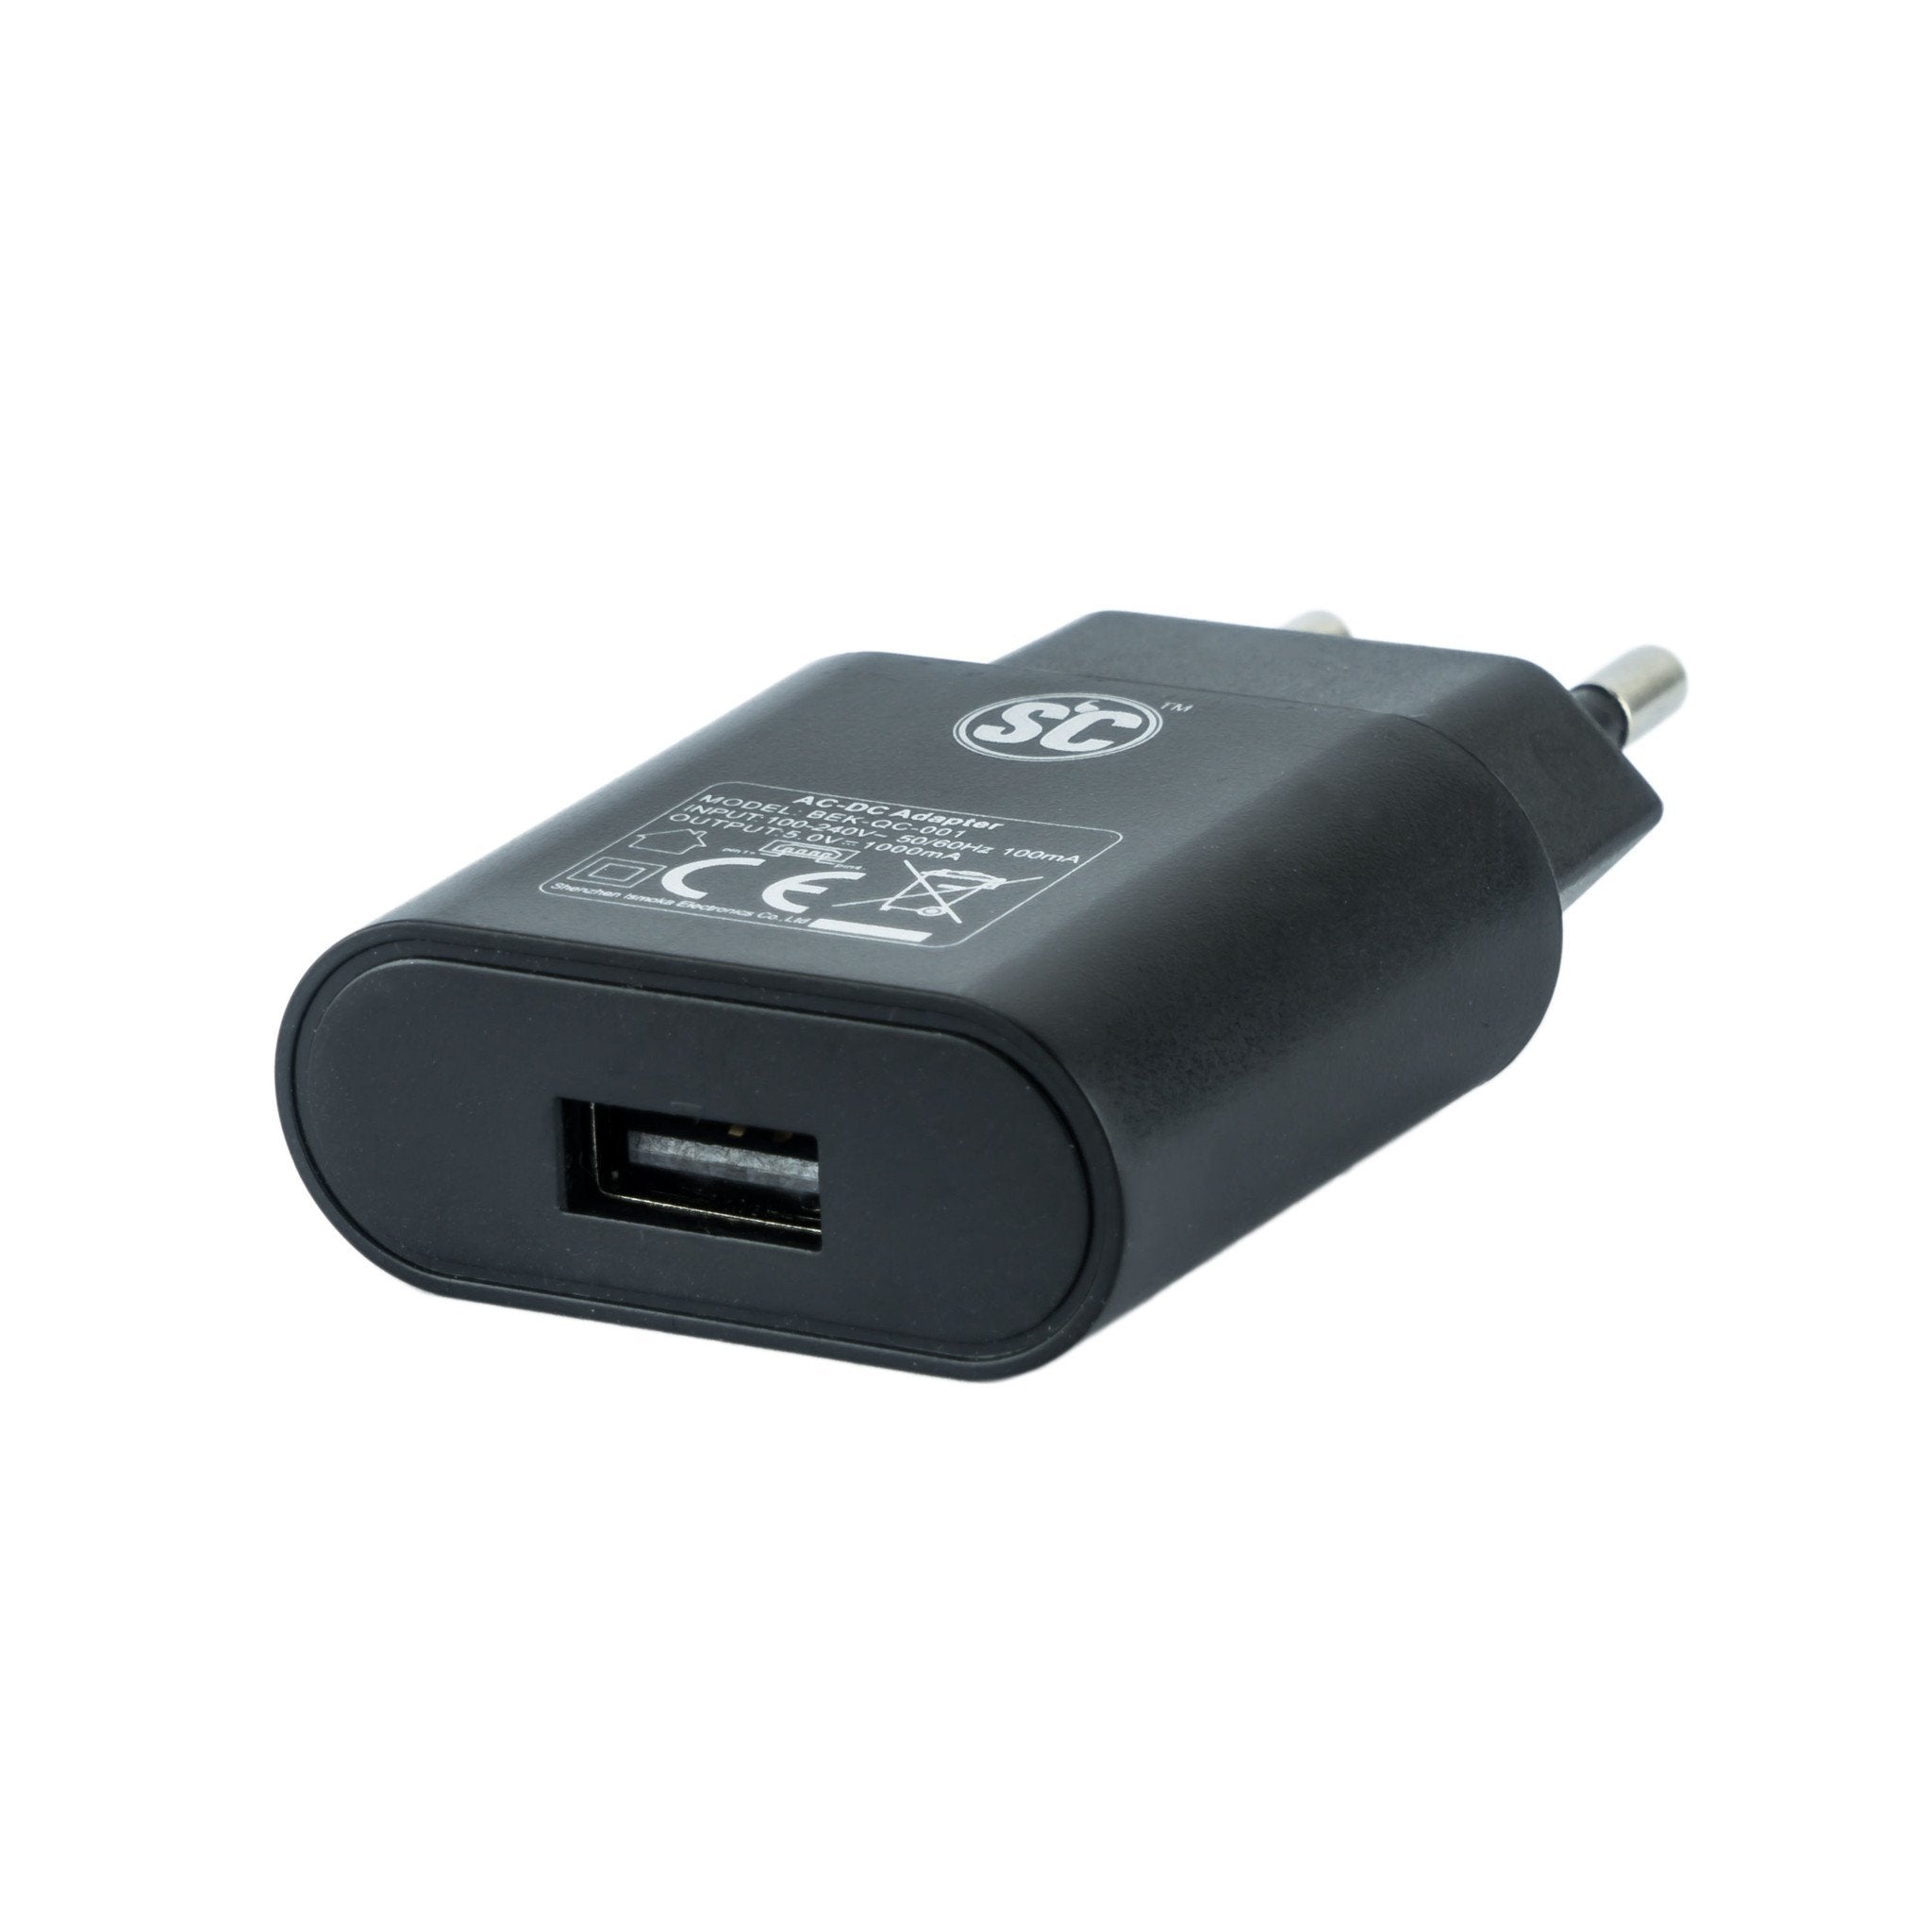 SC Netzstecker / Steckernetzteil / Netzadapter (USB 1000 mA)